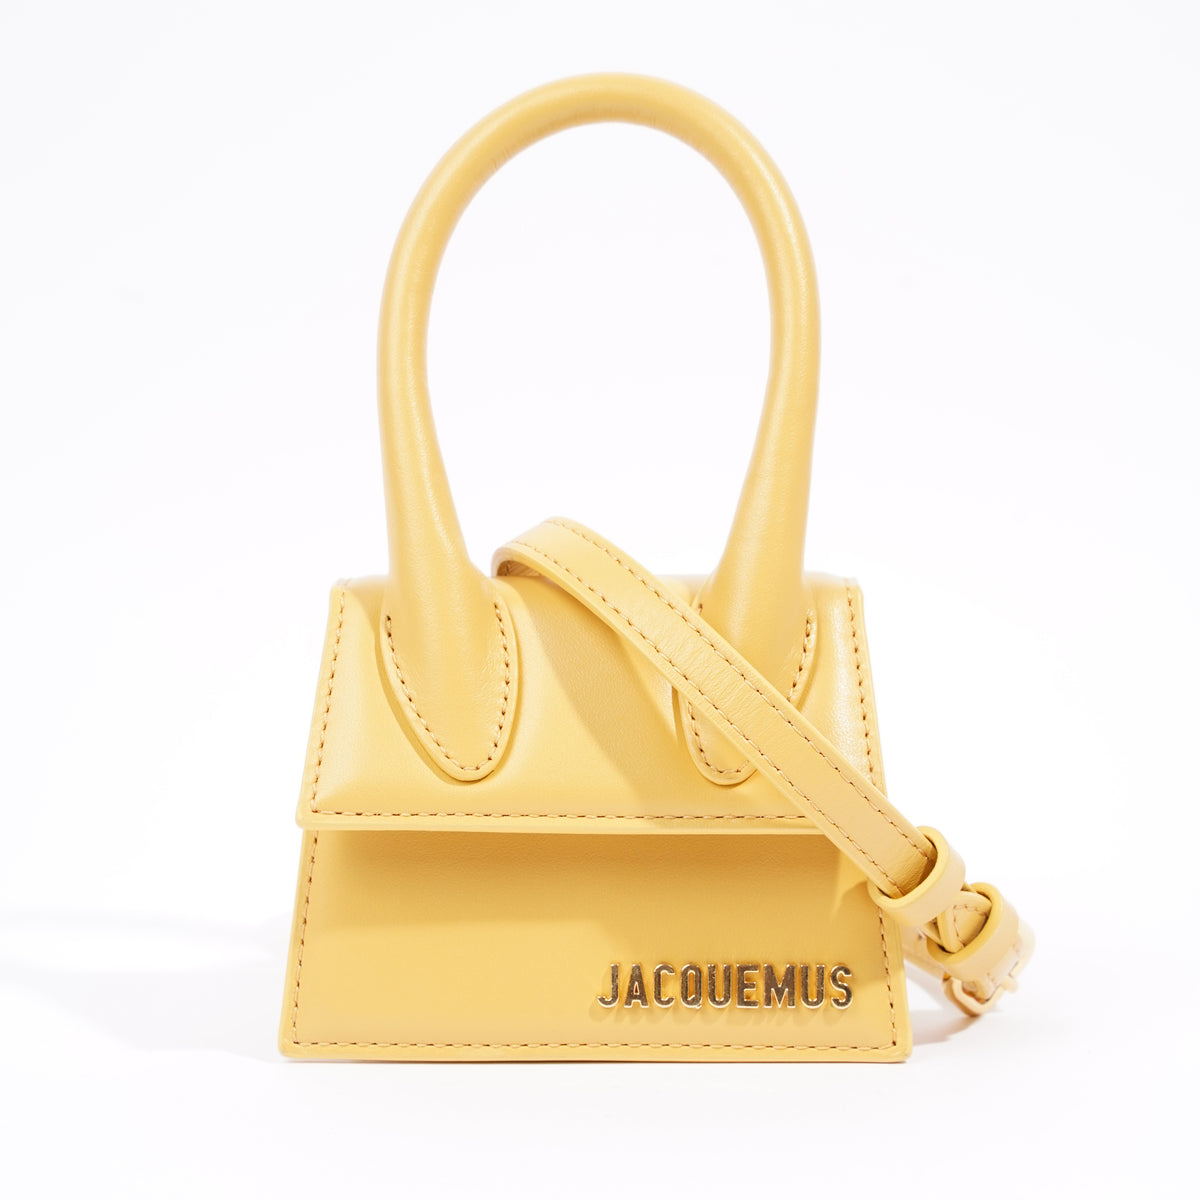 Jacquemus Le Chiquito Mini Bag in Yellow